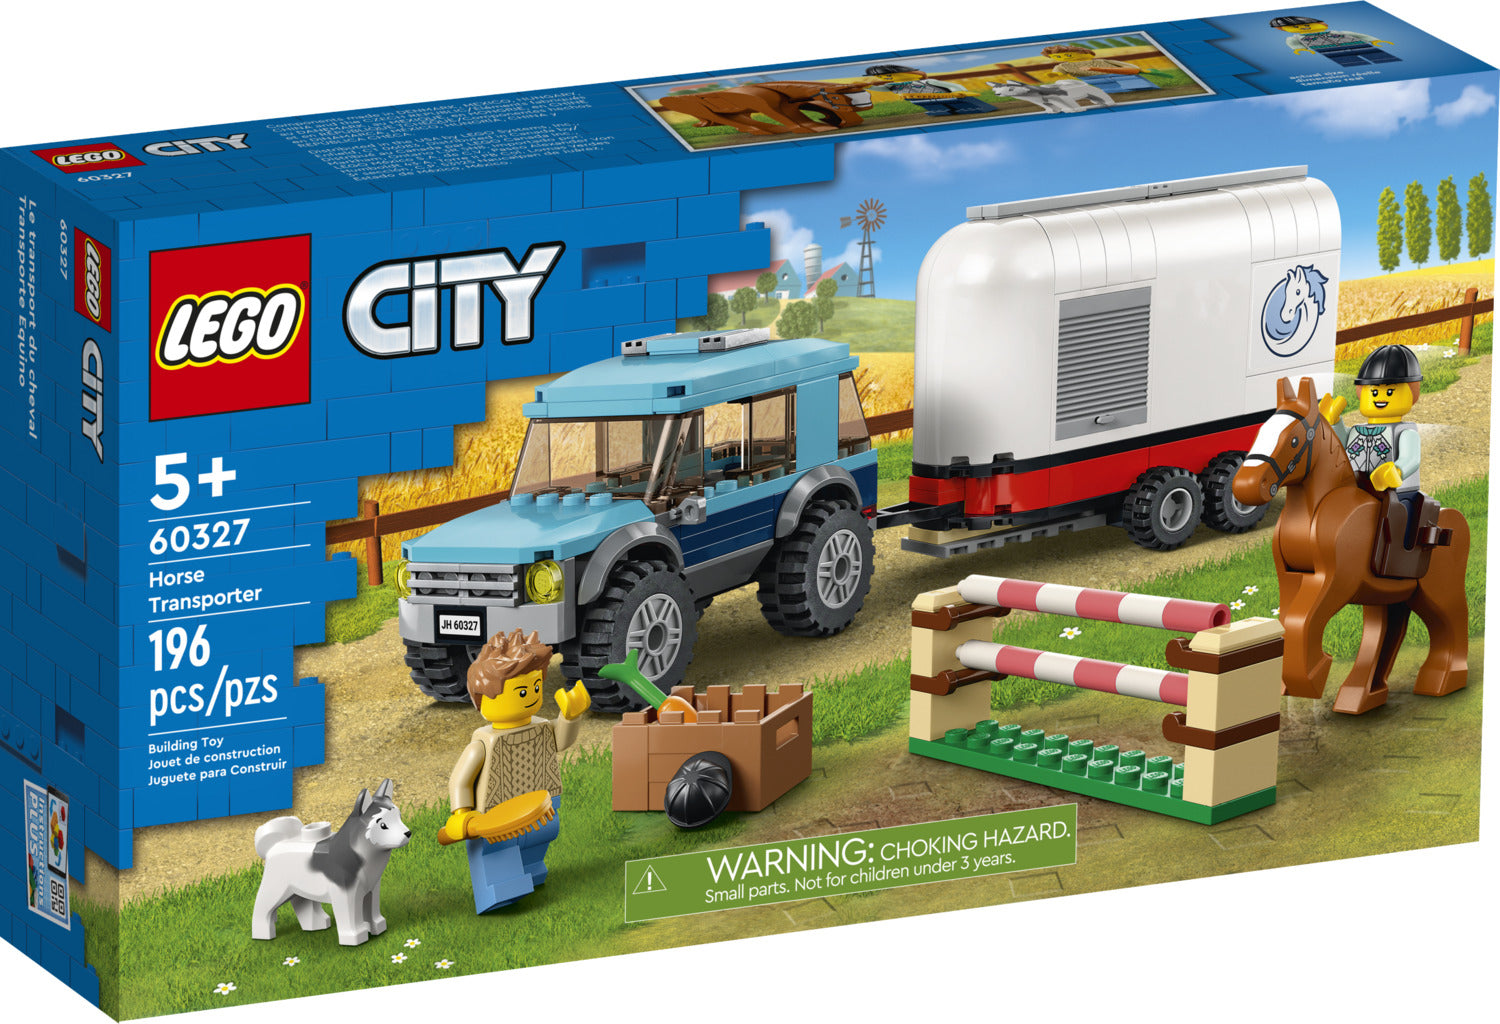 LEGO City Stuntz Stunt Park 60293 Building Set (170 Pieces)